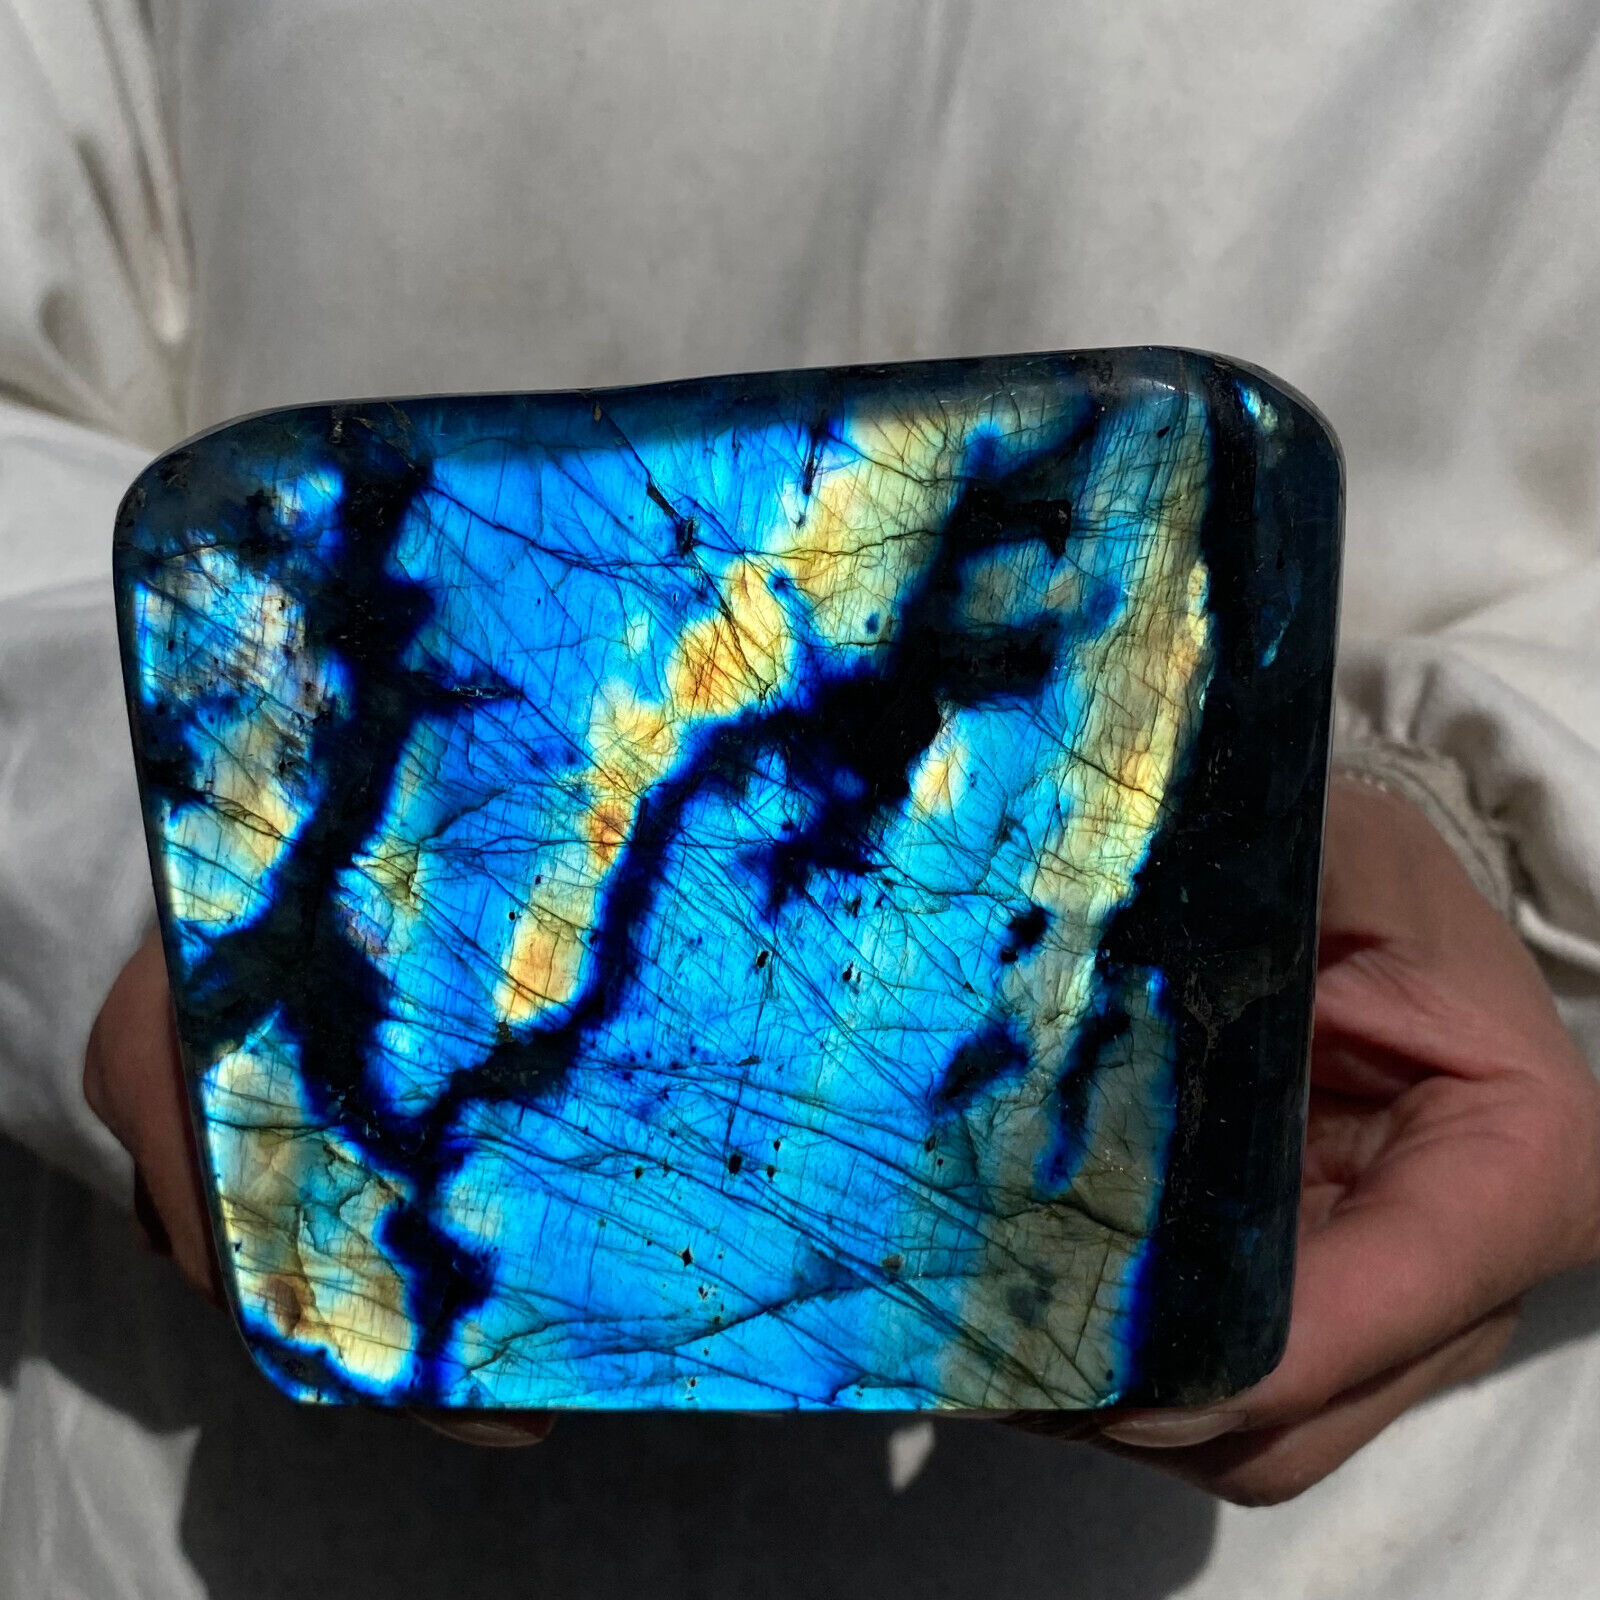 2.5lb Large Natural Labradorite Quartz Crystal Display Mineral Specimen Healing